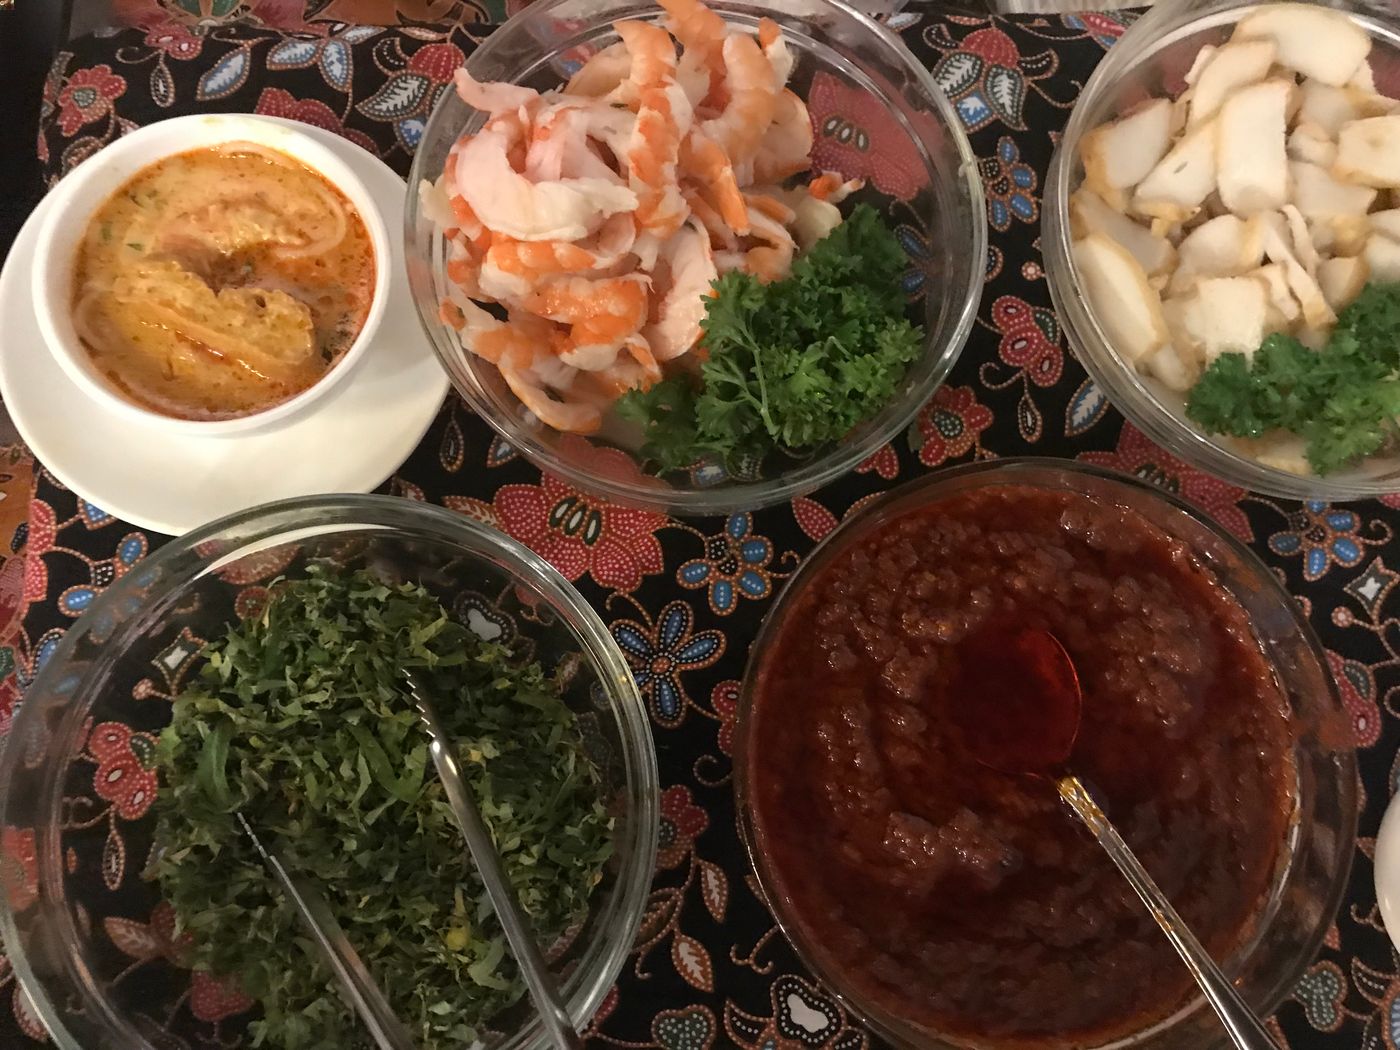 Ingredients for laksa include prawns, fishcake, sambal chilli and laksa leaves.